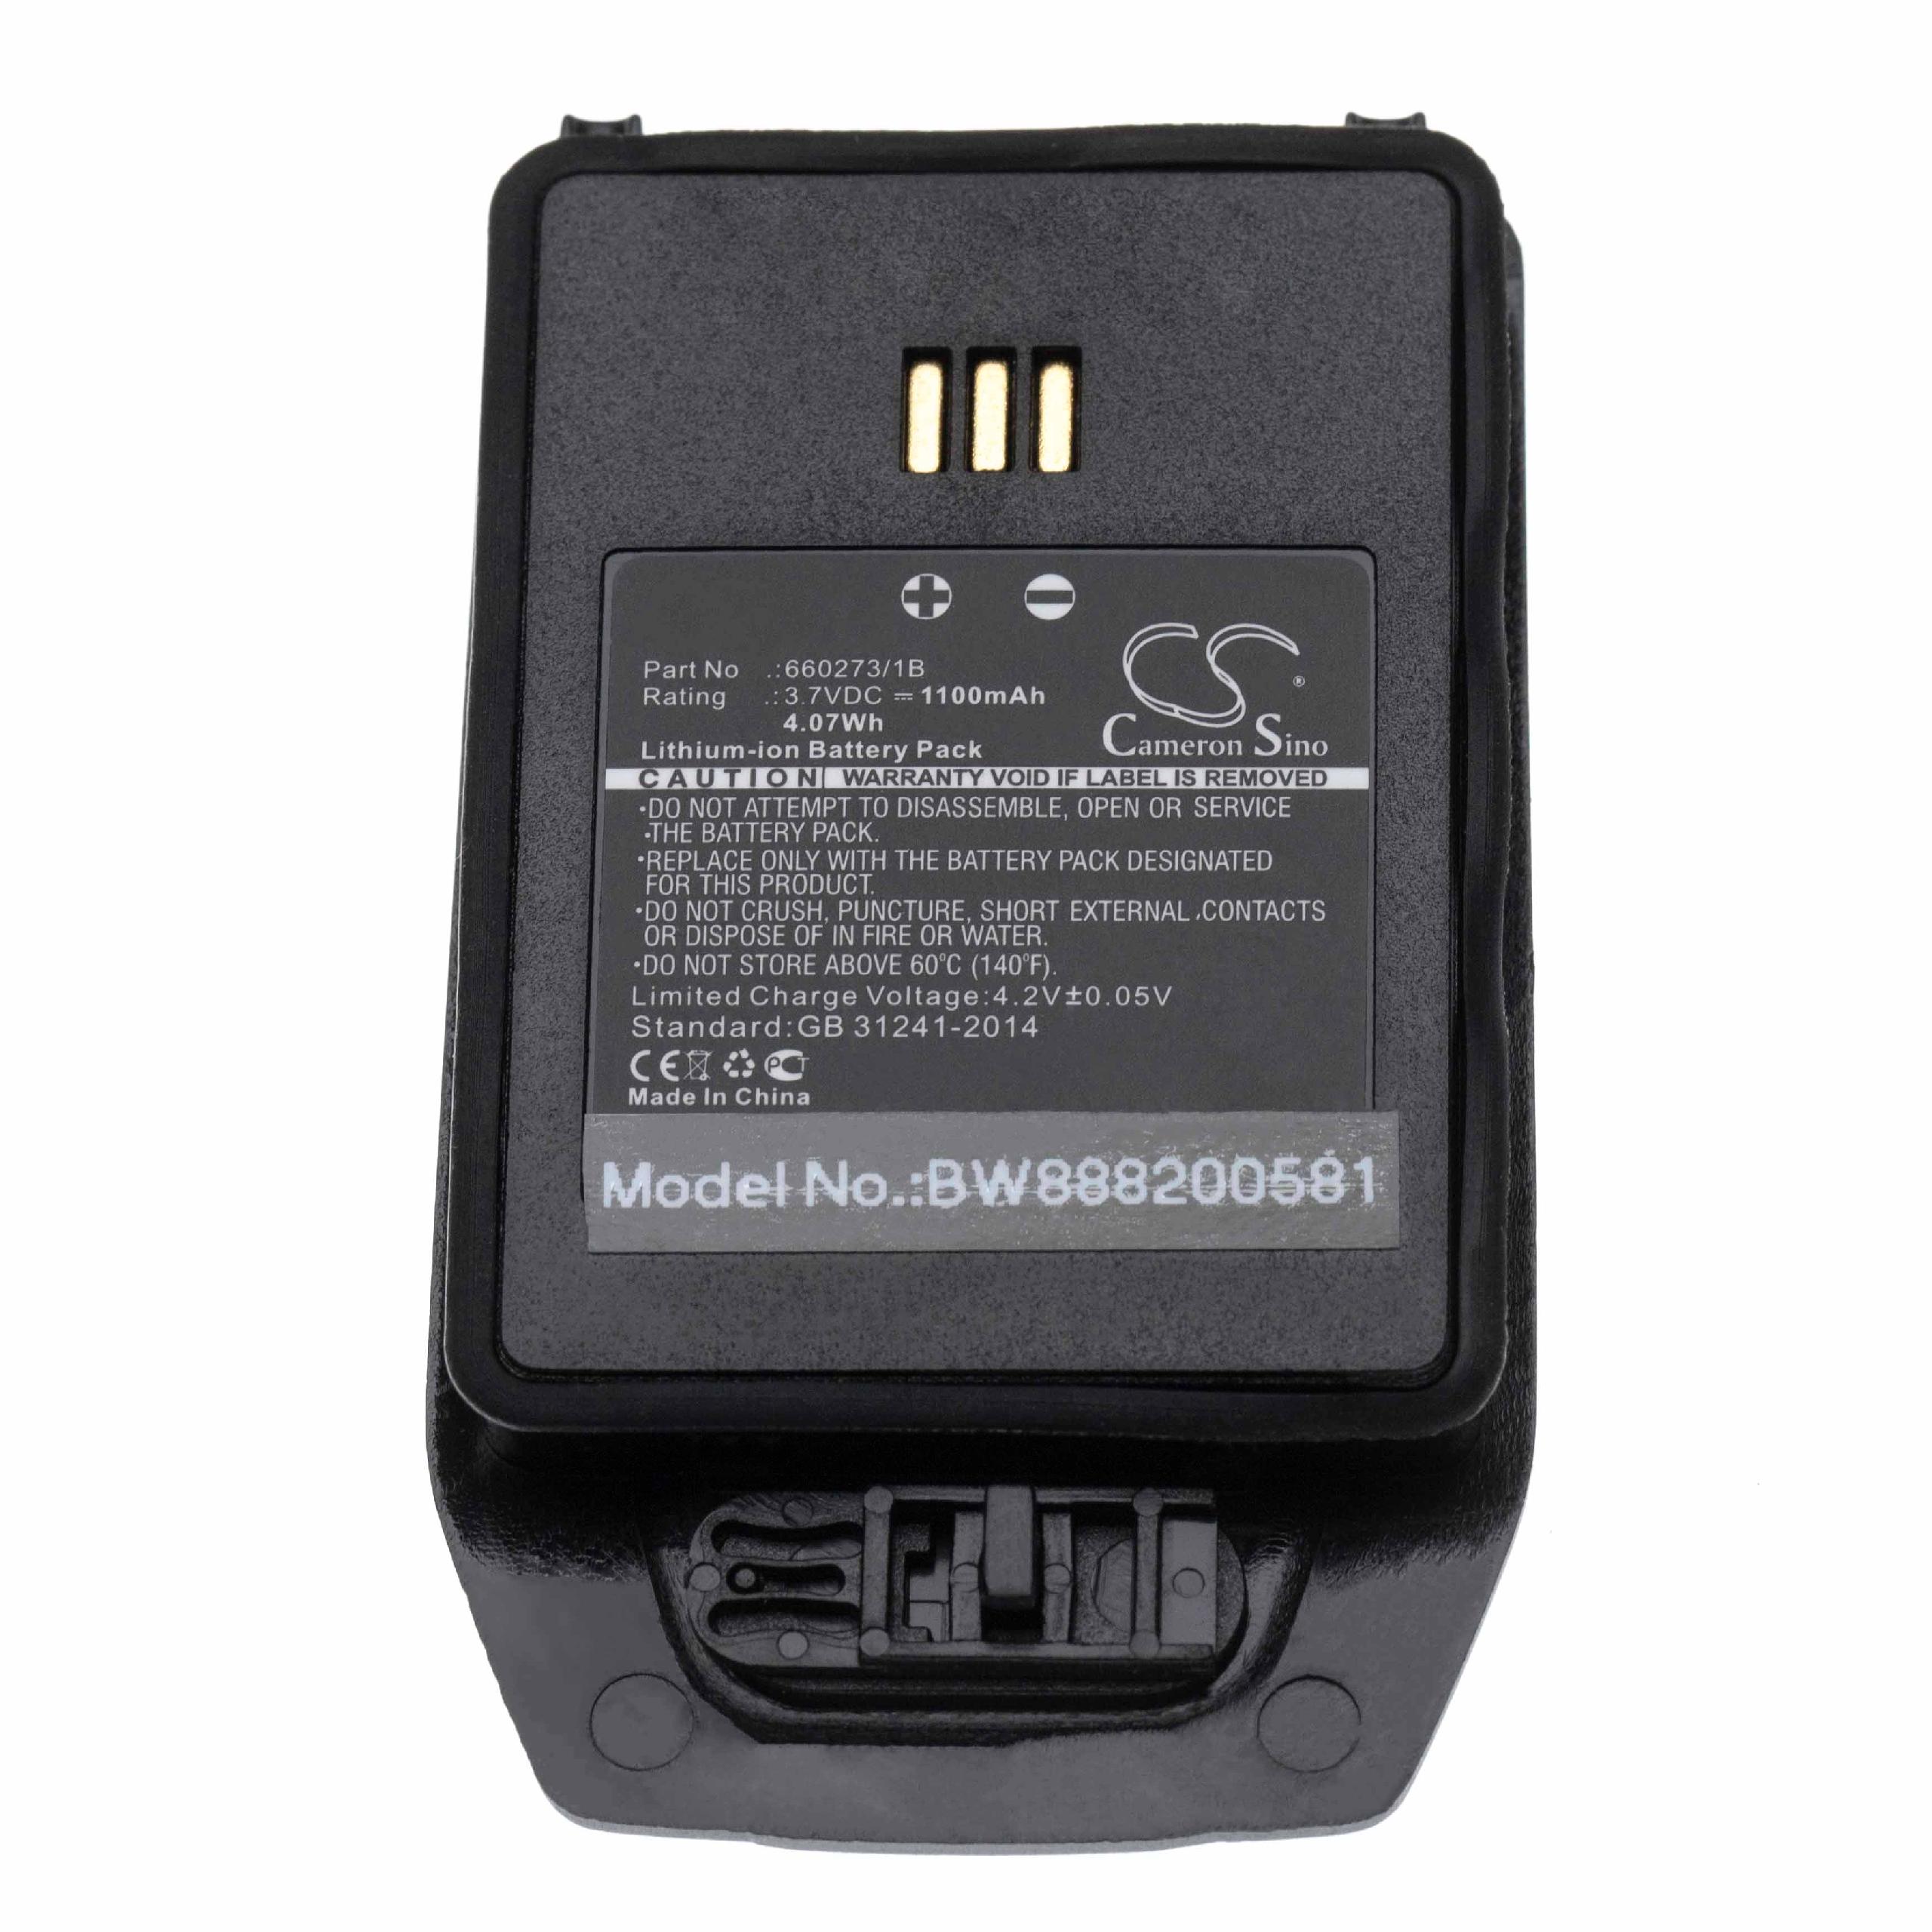 Akumulator bateria do telefonu smartfona zam. Ascom 1220187, 660273/1B - 1100mAh, 3,7V, Li-Ion